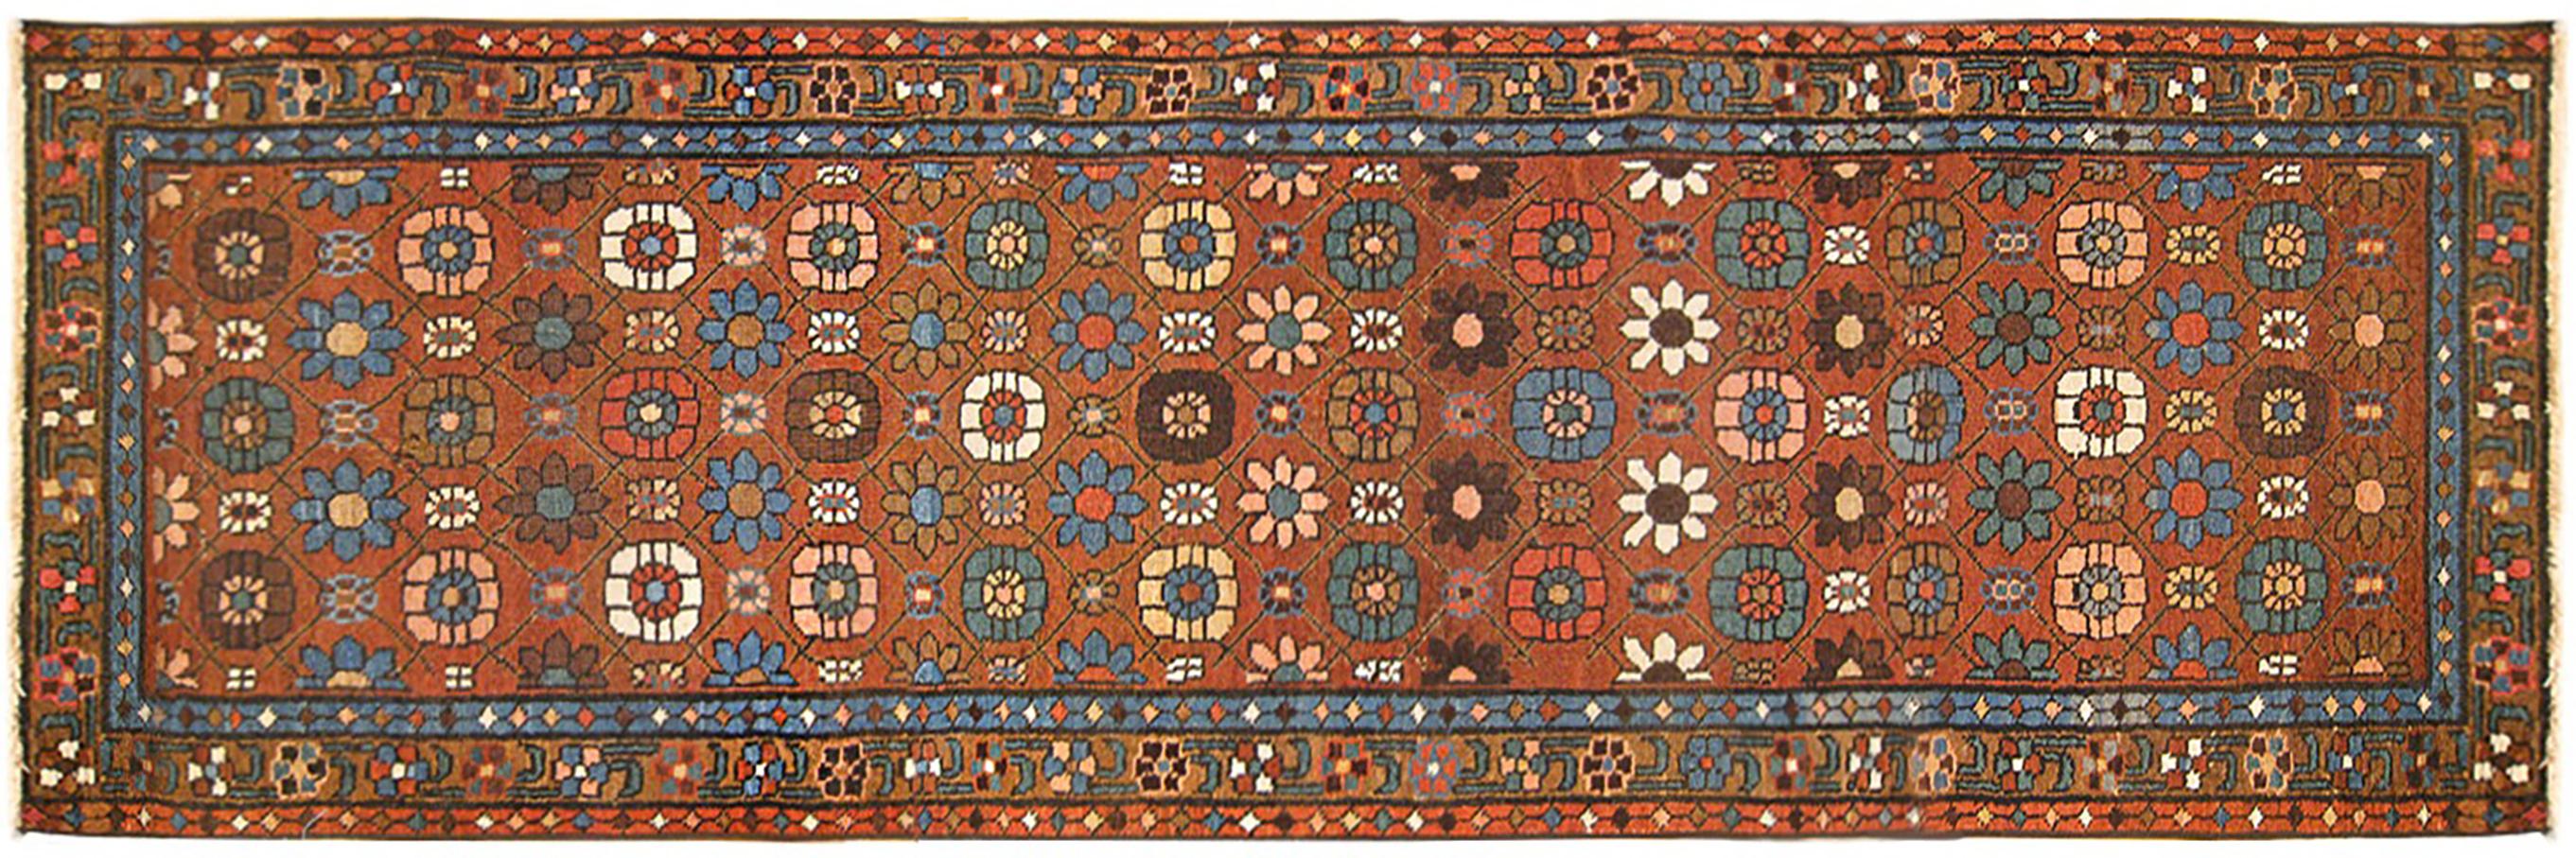 Antique Persian Heriz Oriental Rug, in Runner size, Repeating Flower Head Design